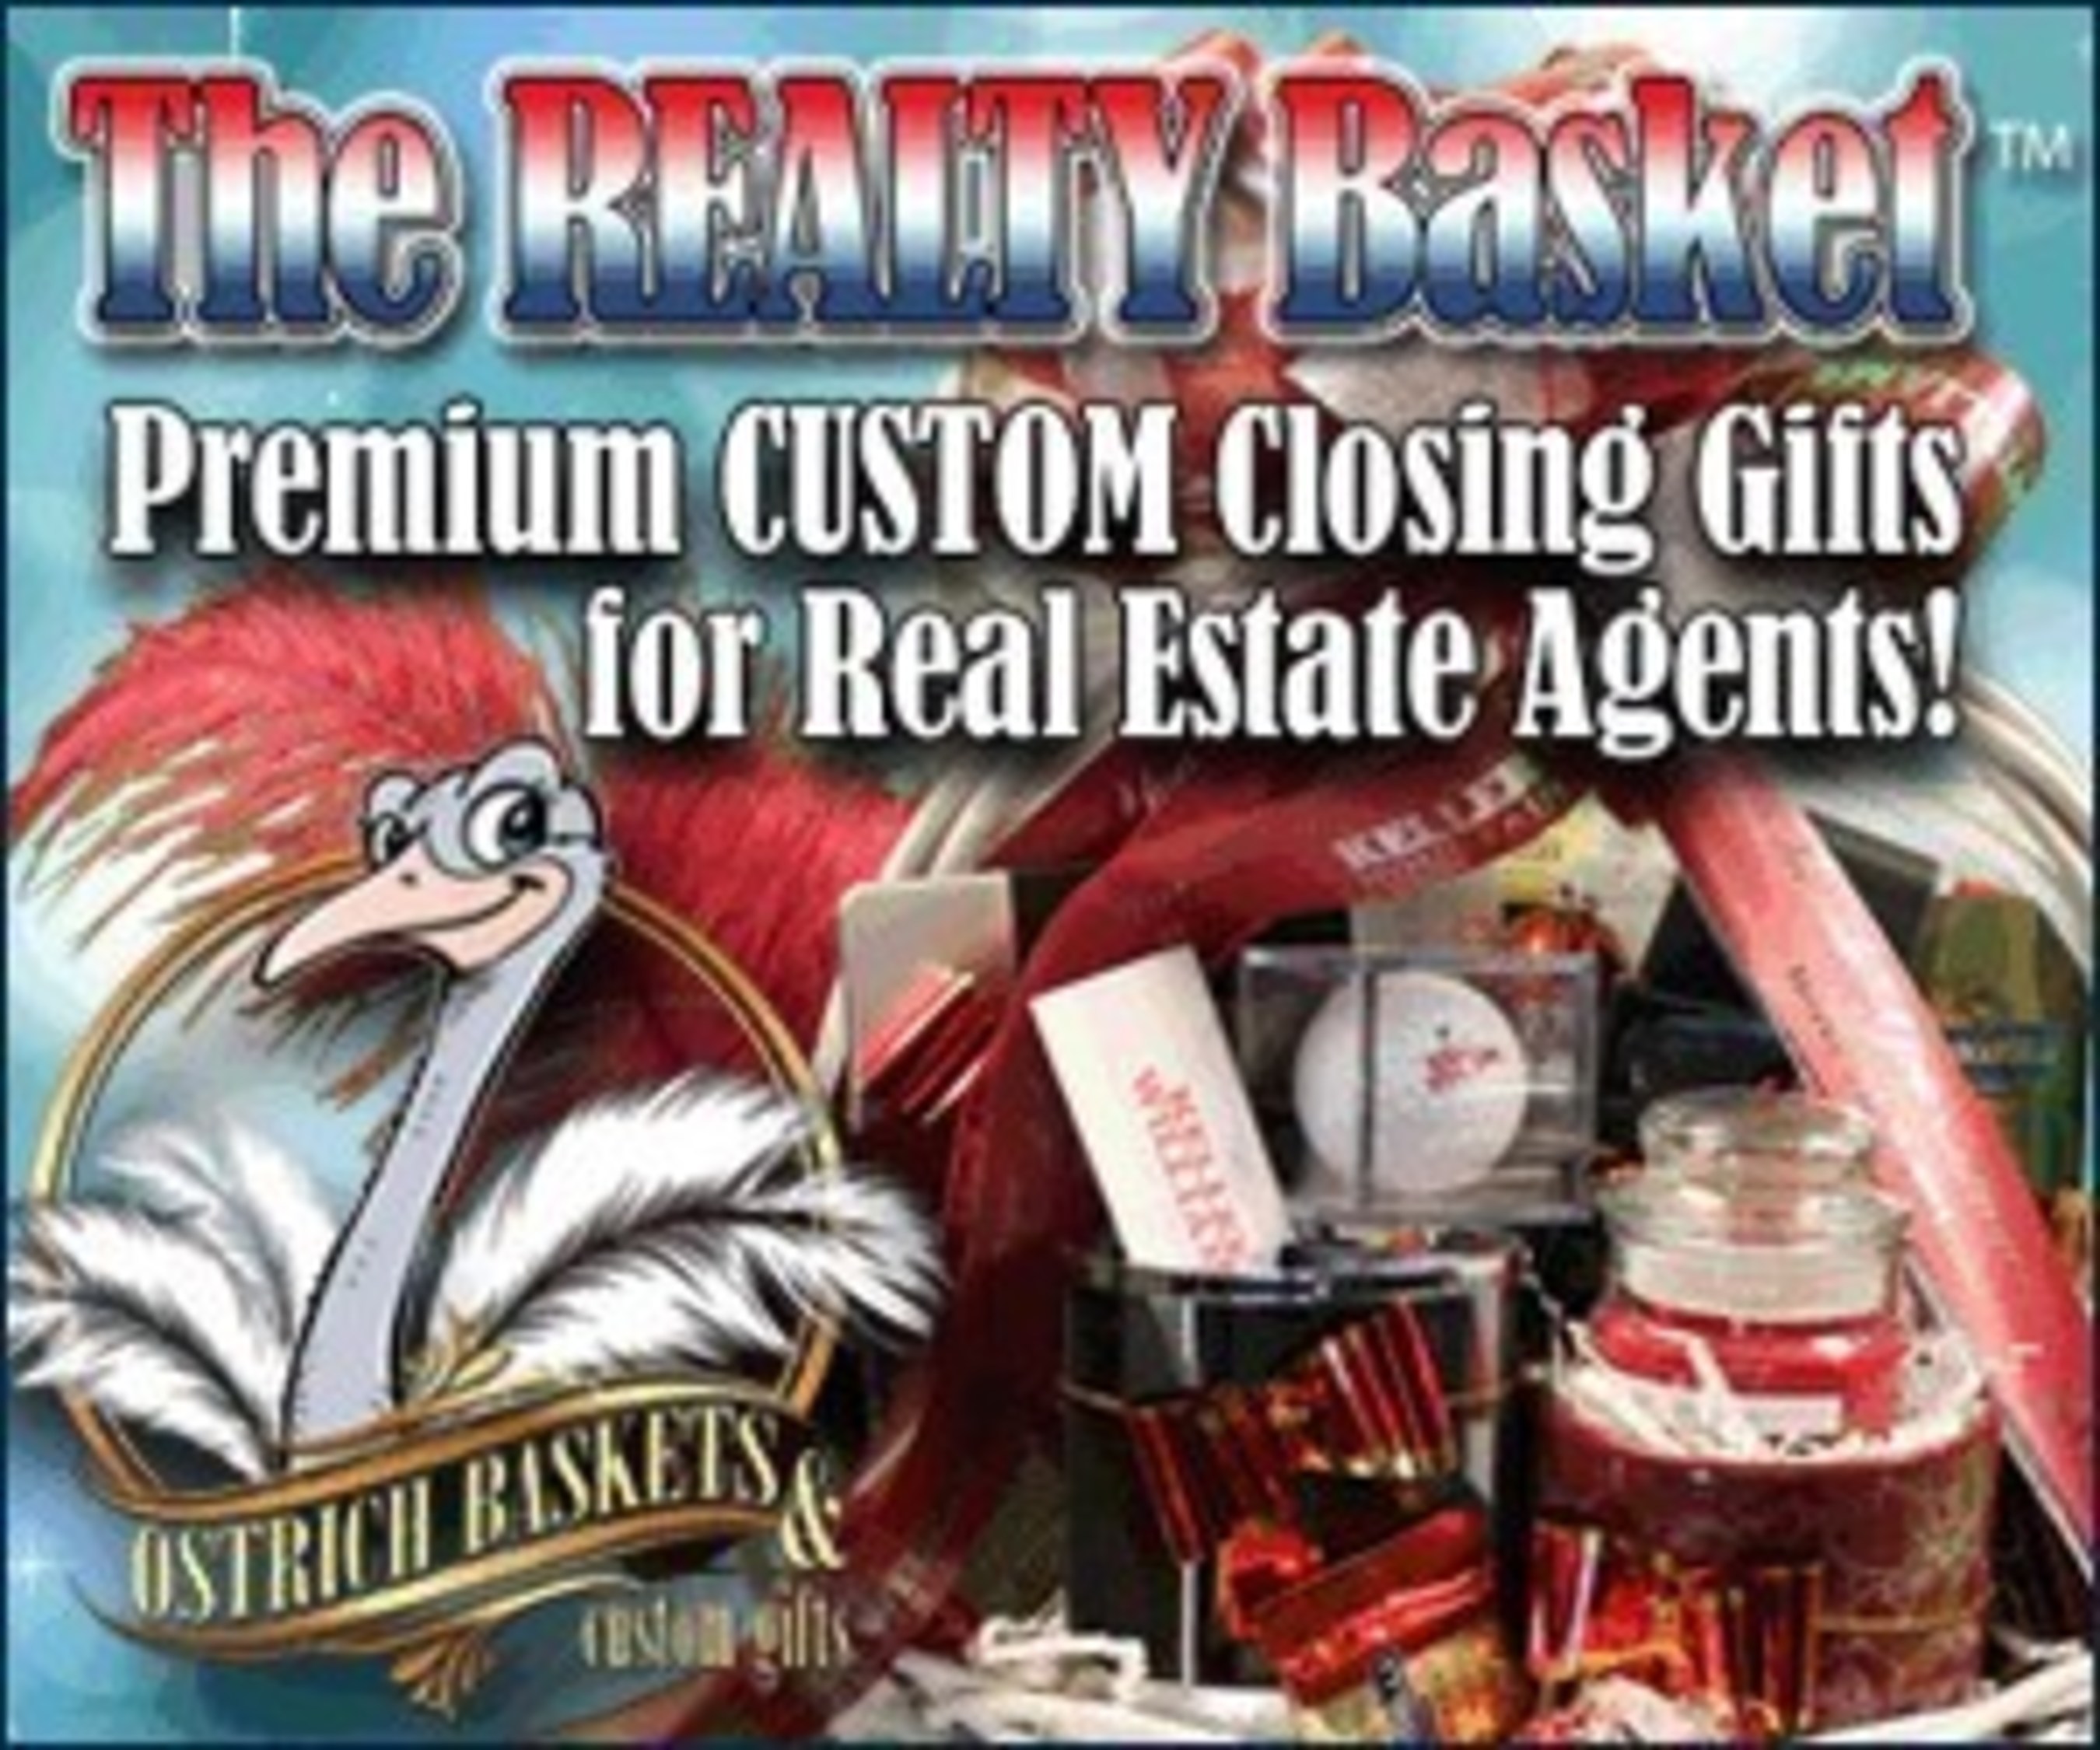 Ostrich Baskets & Custom Gifts (PRNewsFoto/Ostrich Baskets & Custom Gifts)